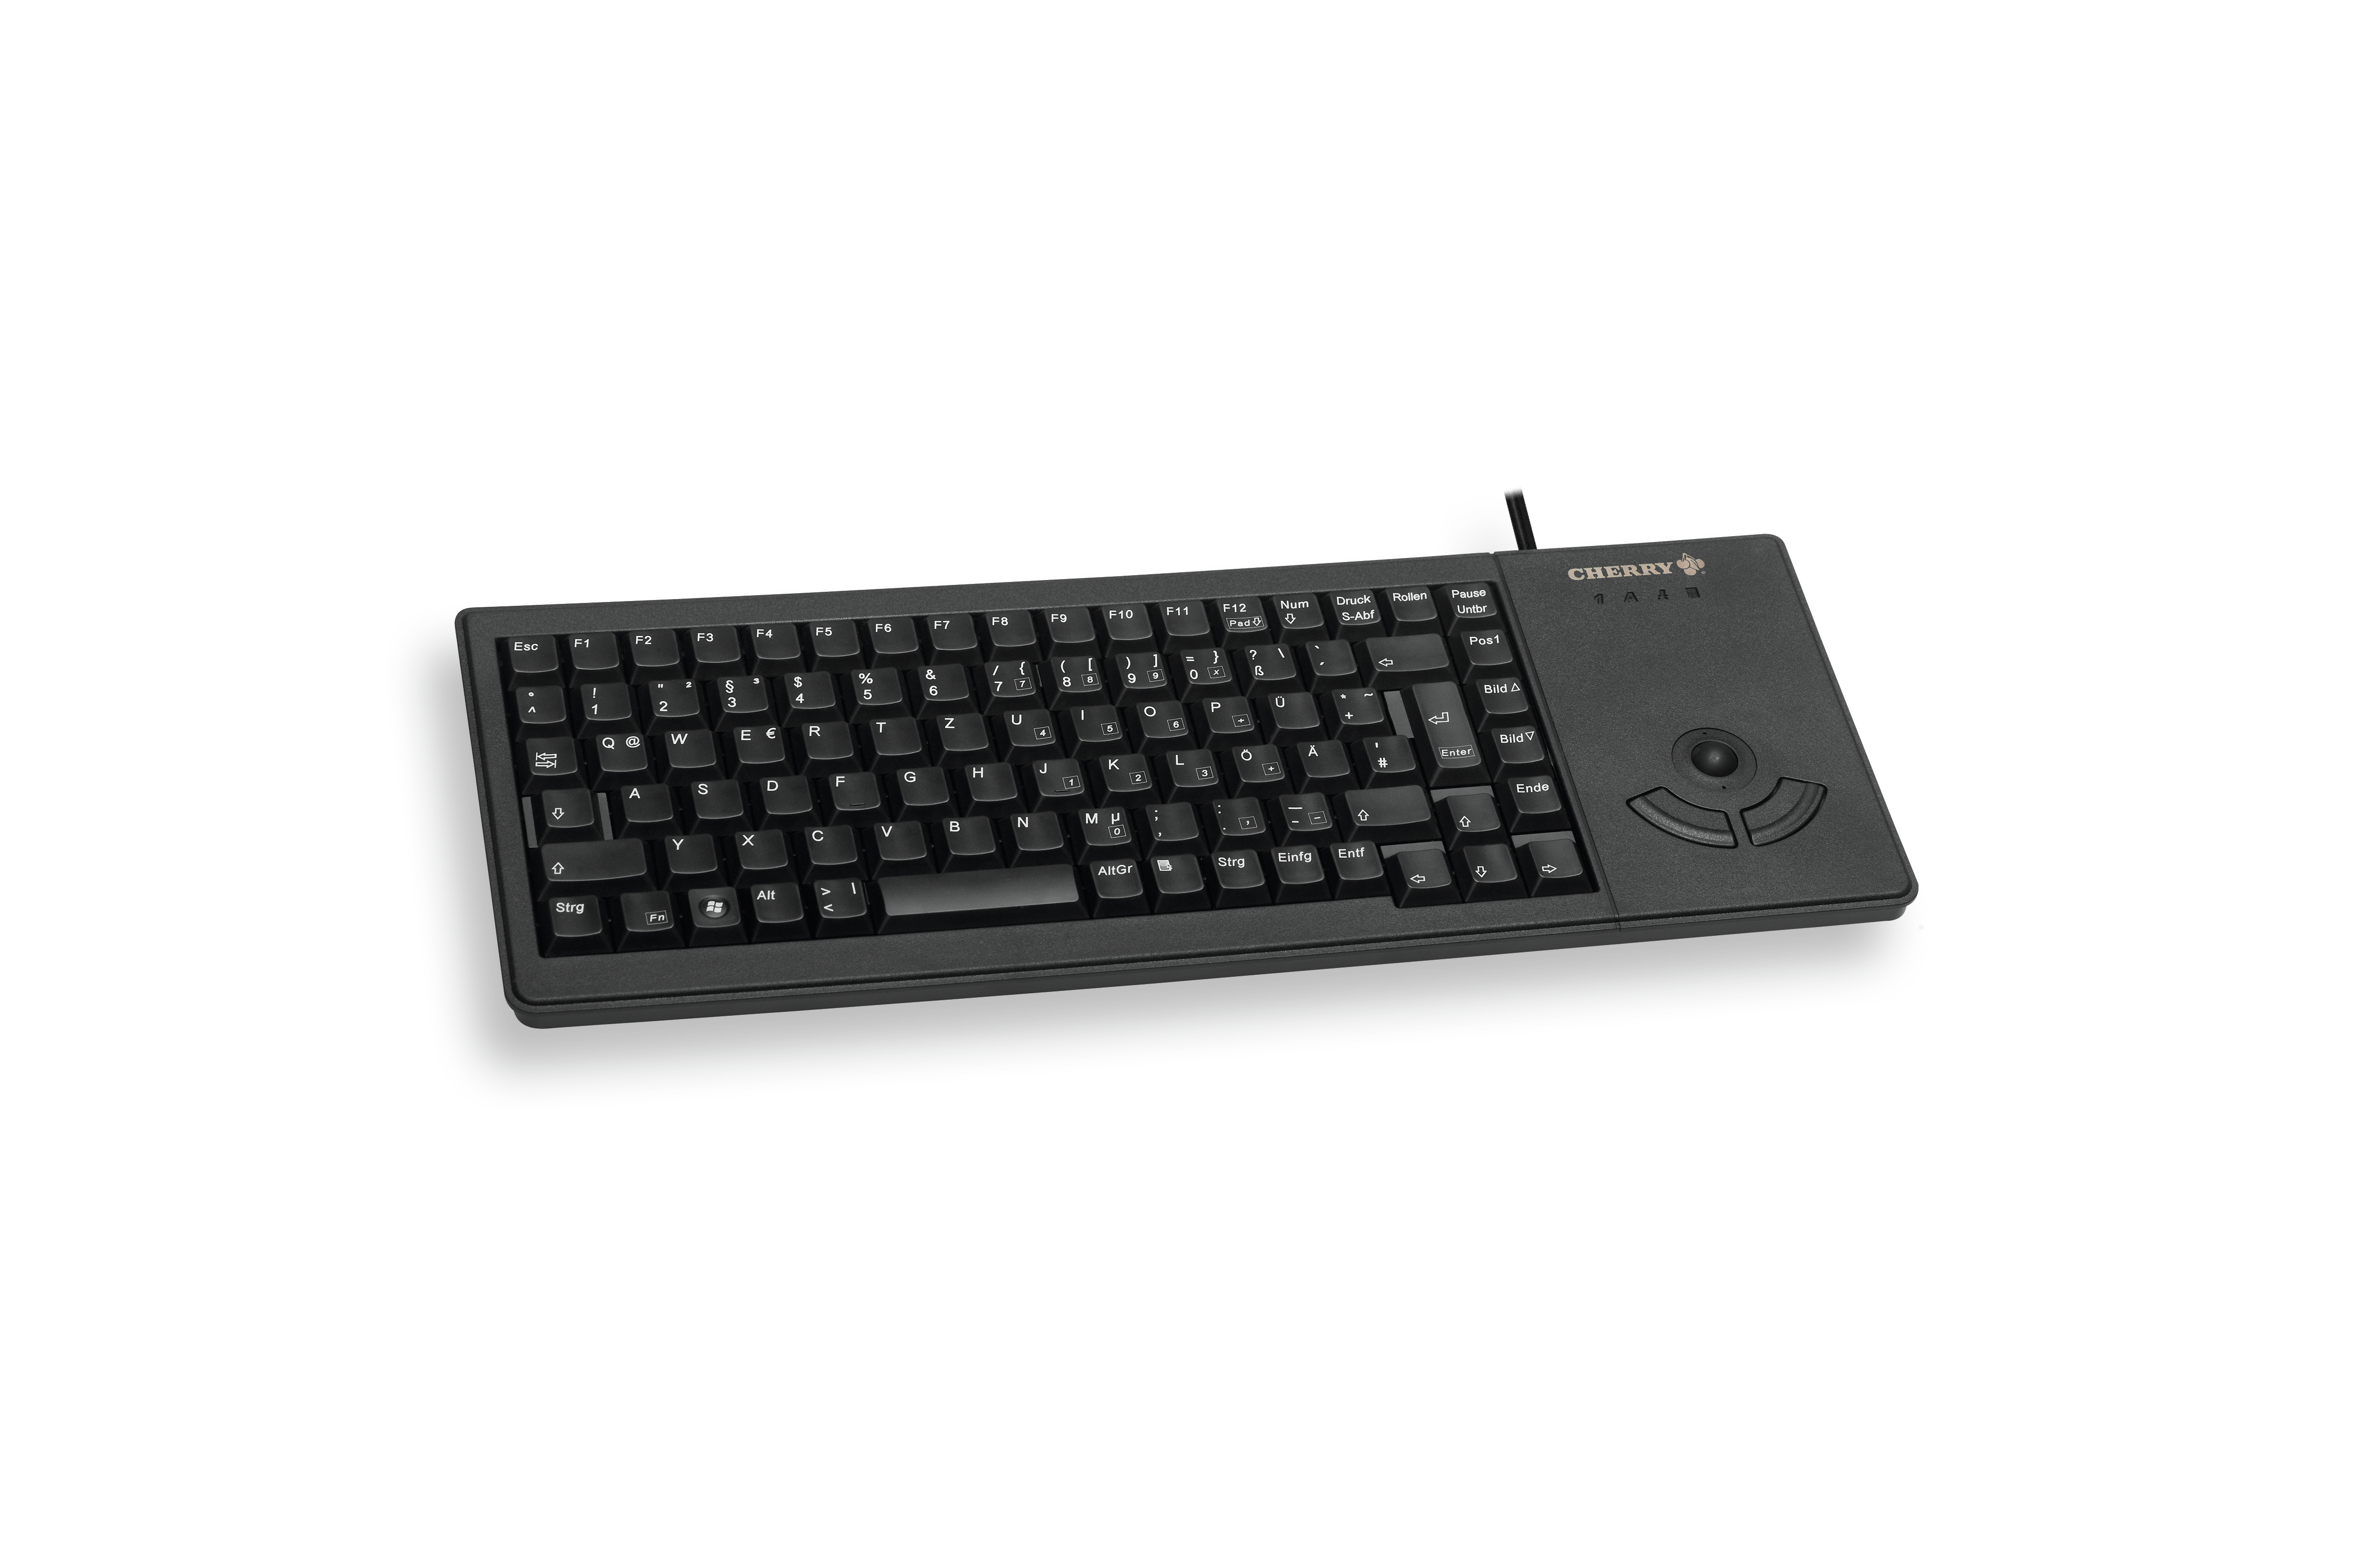 Cherry XS G84-5400 - Tastatur - USB - Pan-Nordic